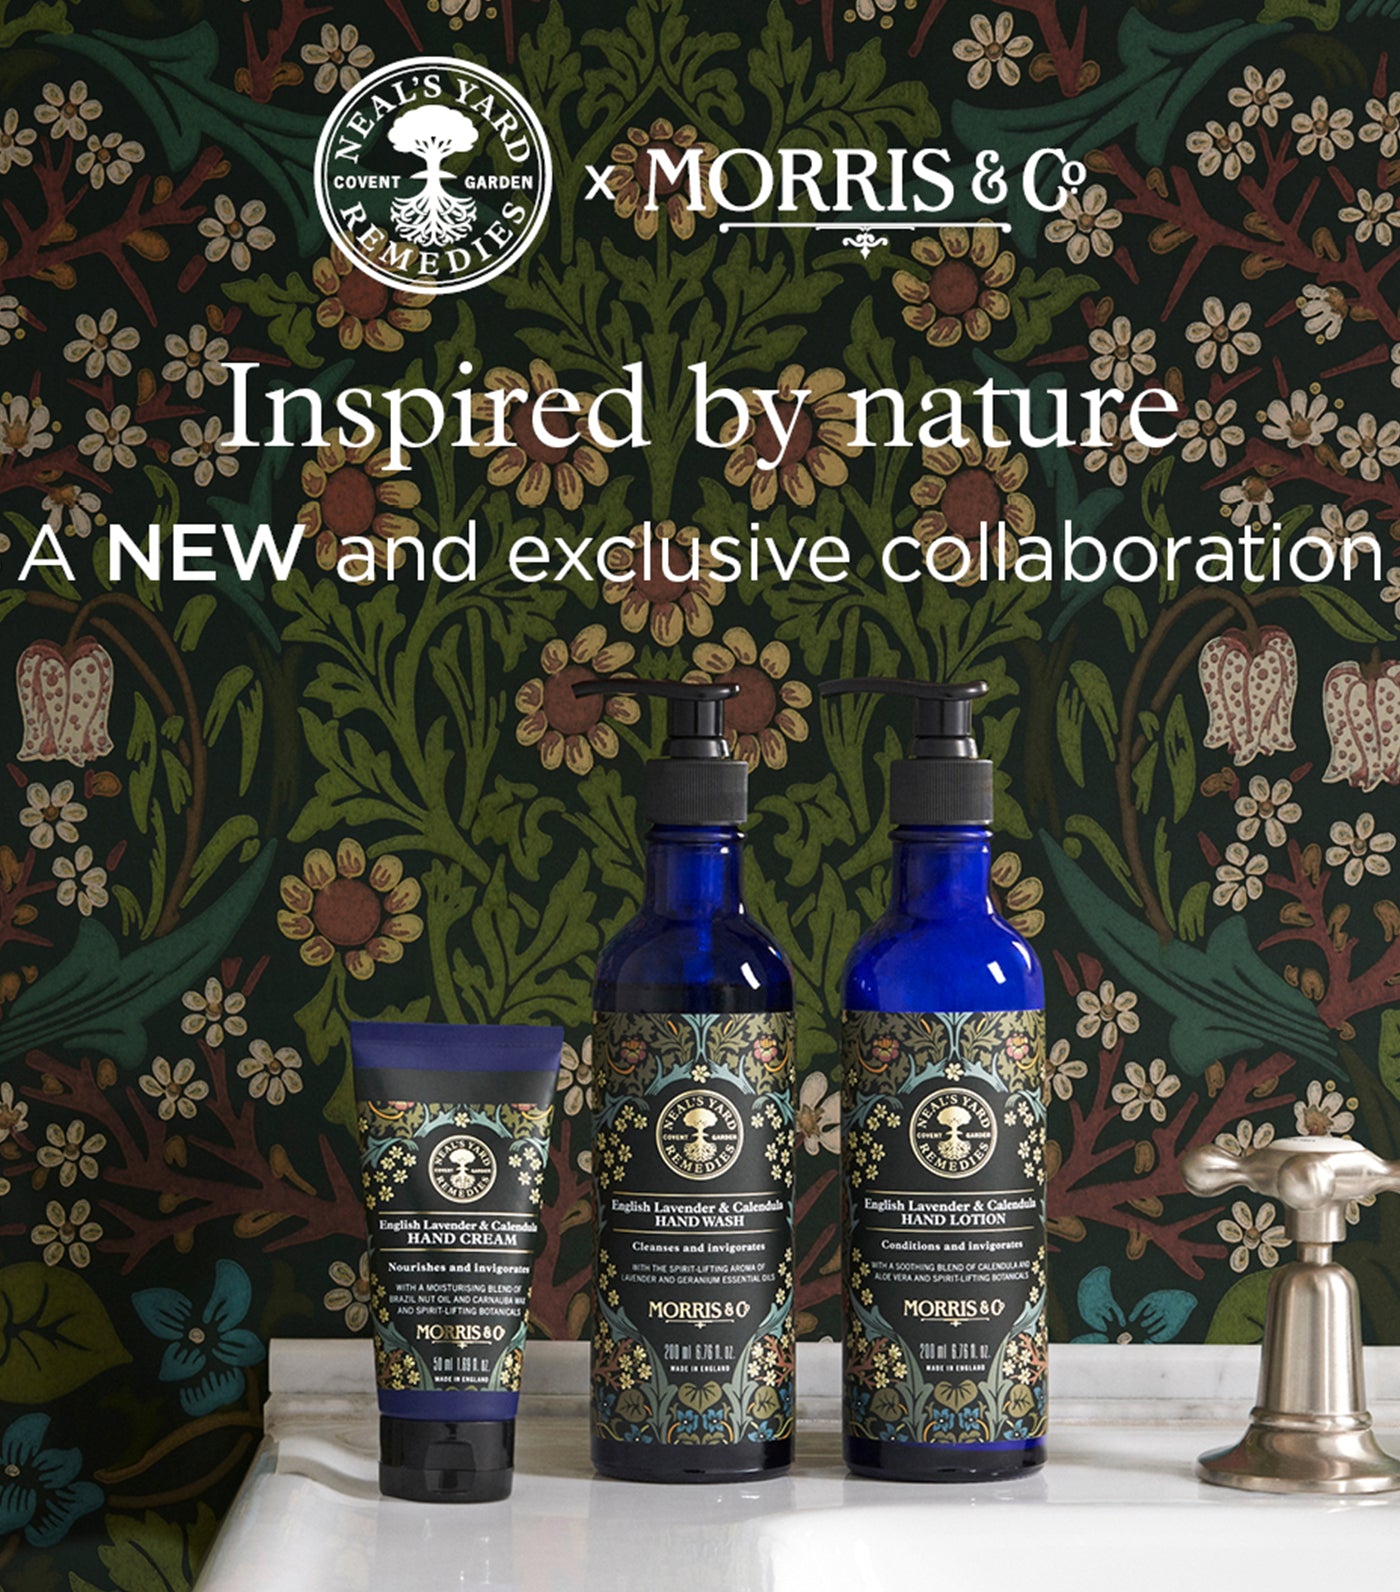 Morris & Co. English Lavender and Calendula Hand Cream